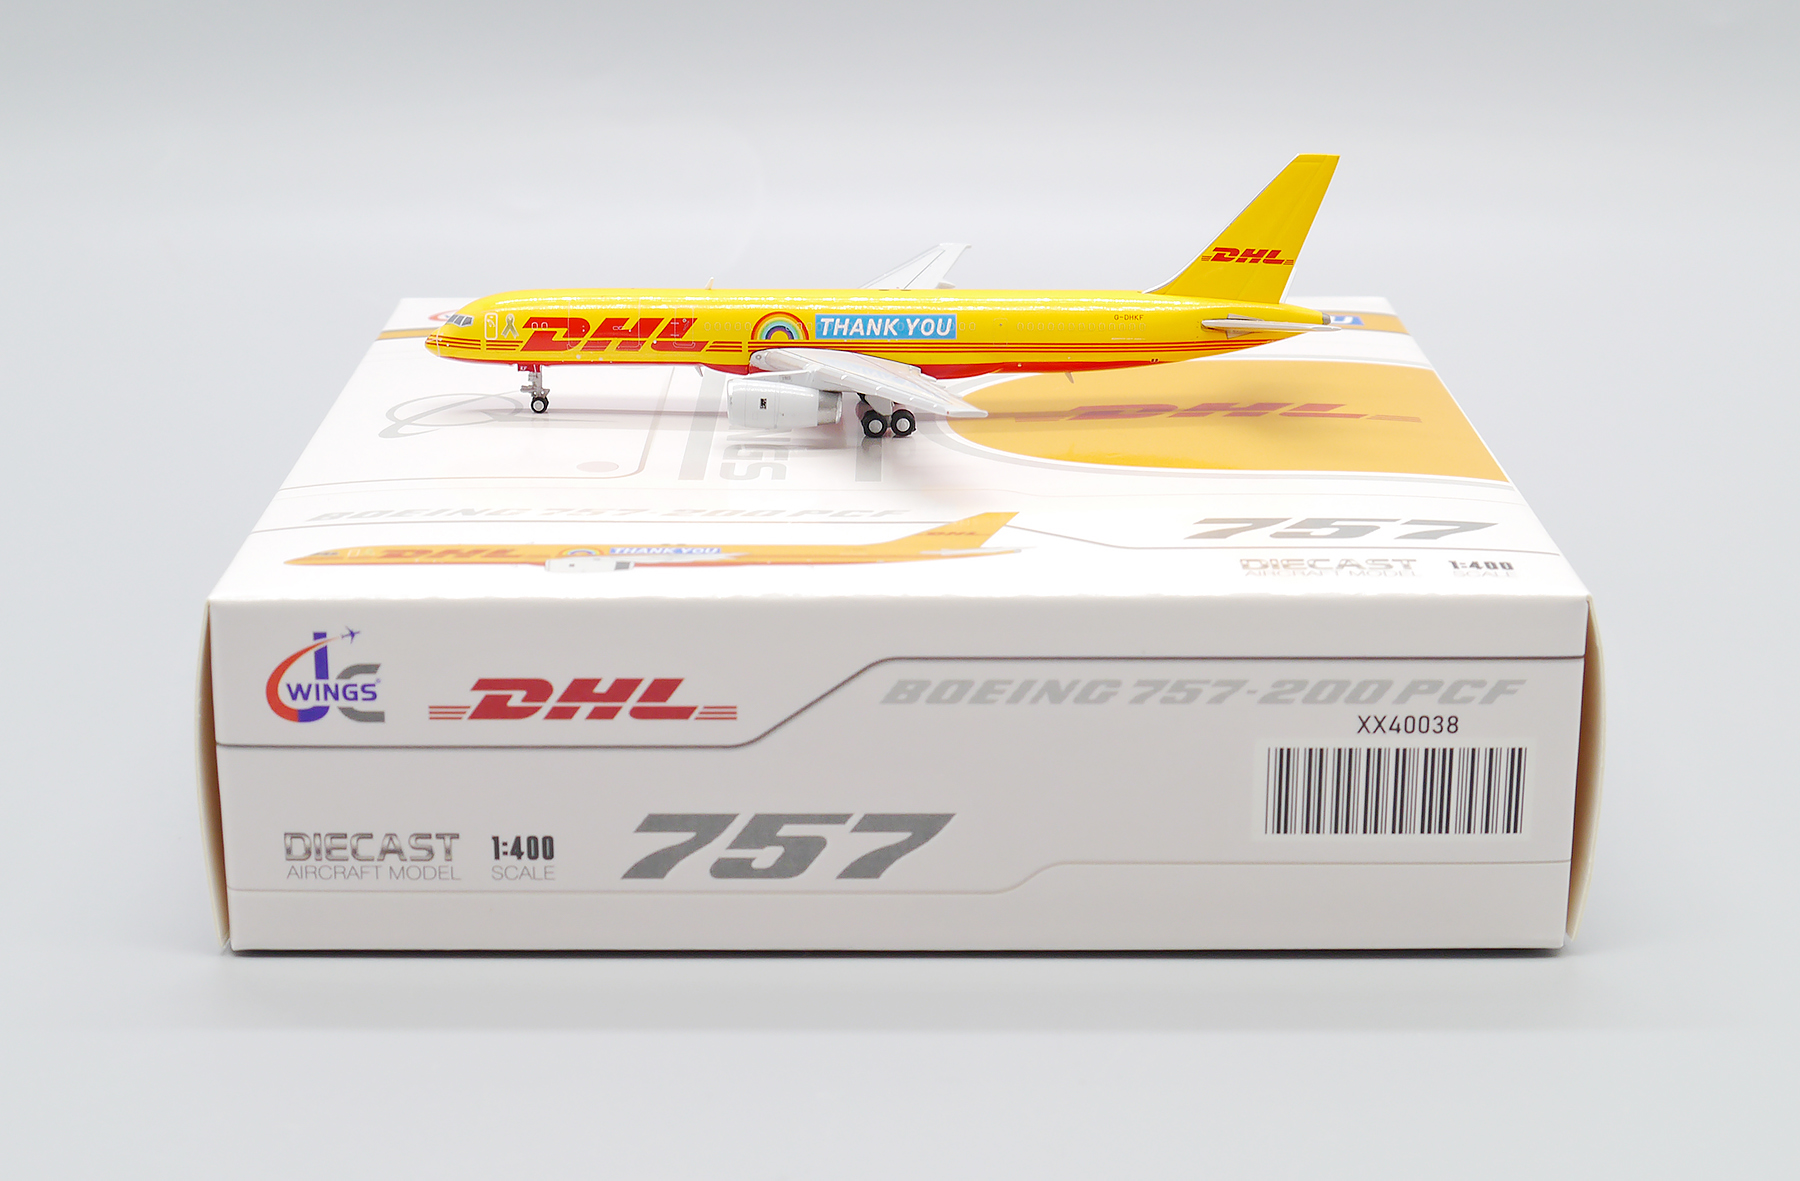 ScaleModelStore.com :: JC Wings 1:400 - XX40038 - DHL Boeing 757